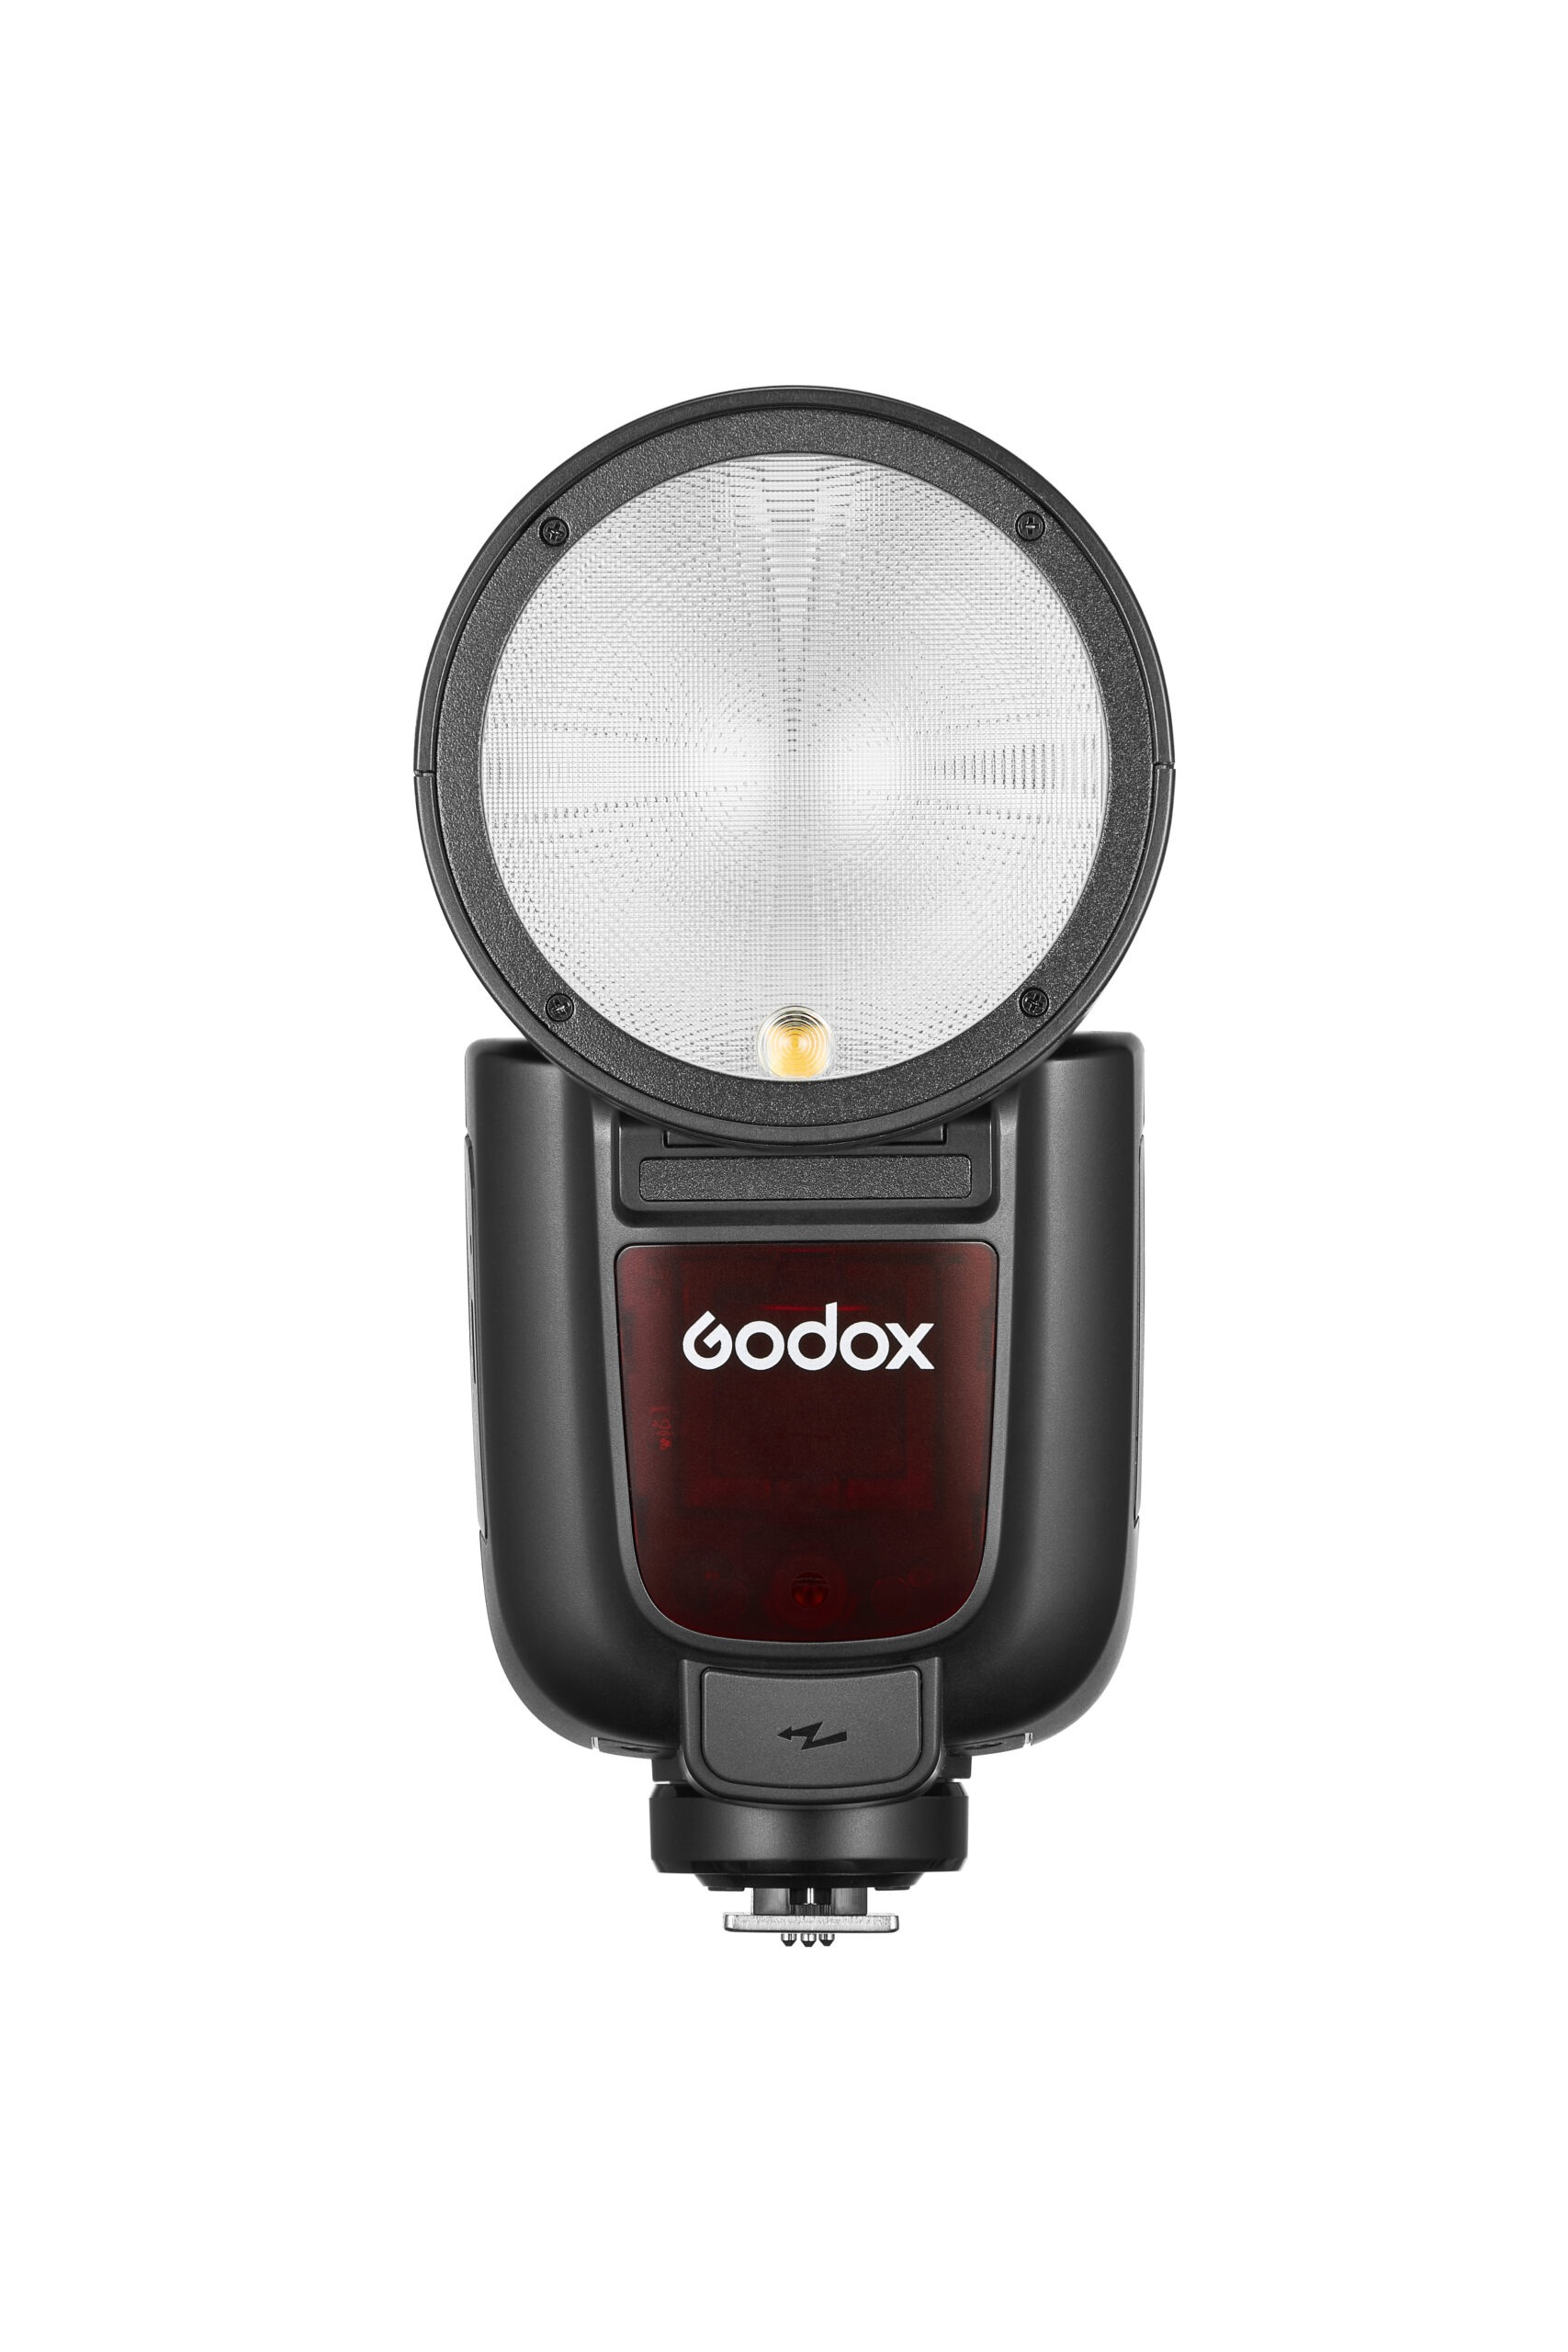 Godox is releasing a Godox V1 Pro flash